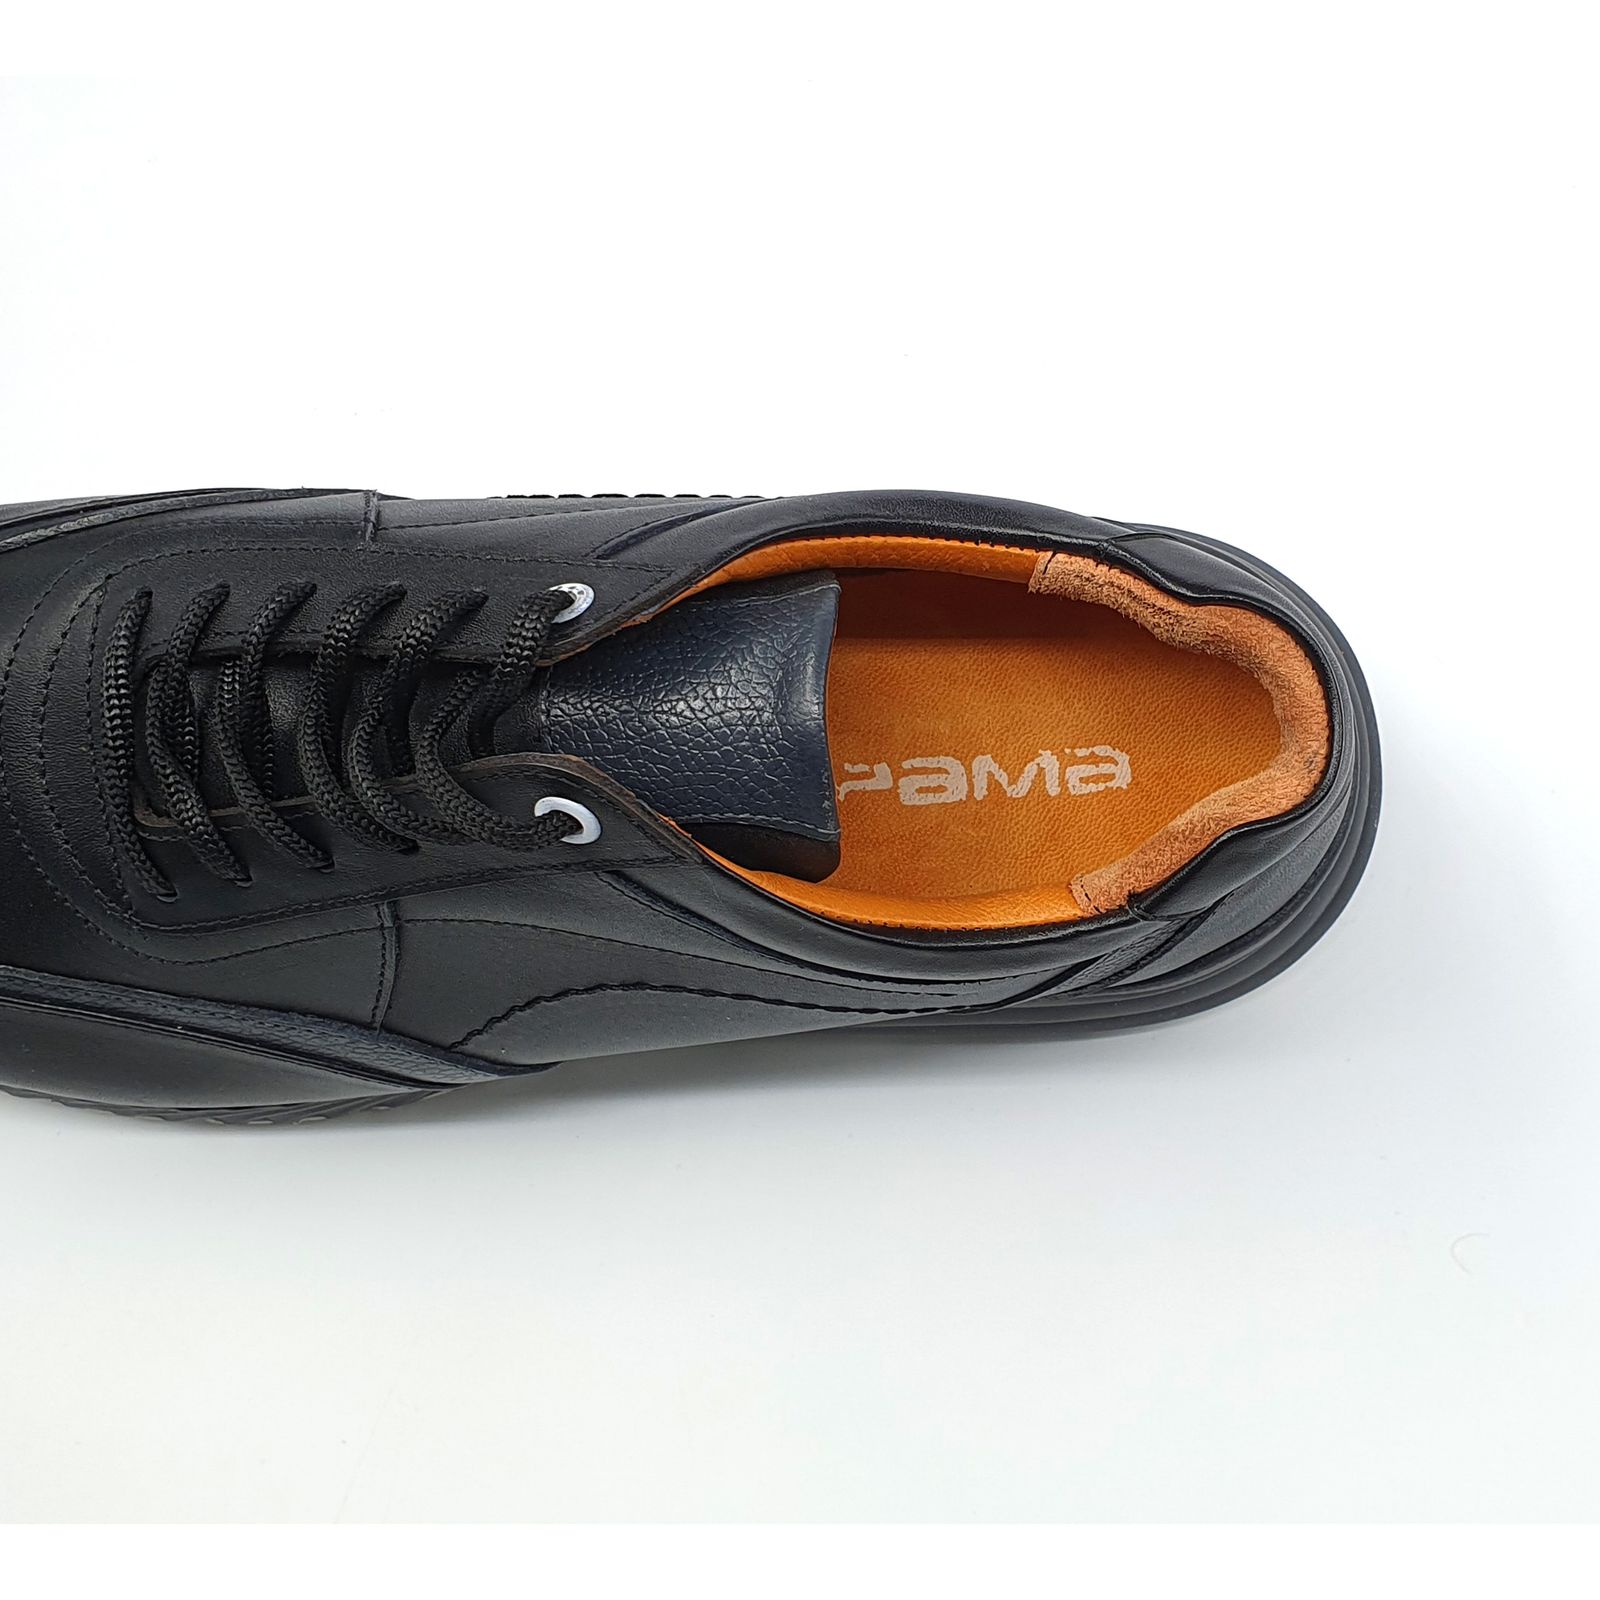 کفش روزمره مردانه پاما مدل ME-631 کد G1808 -  - 7